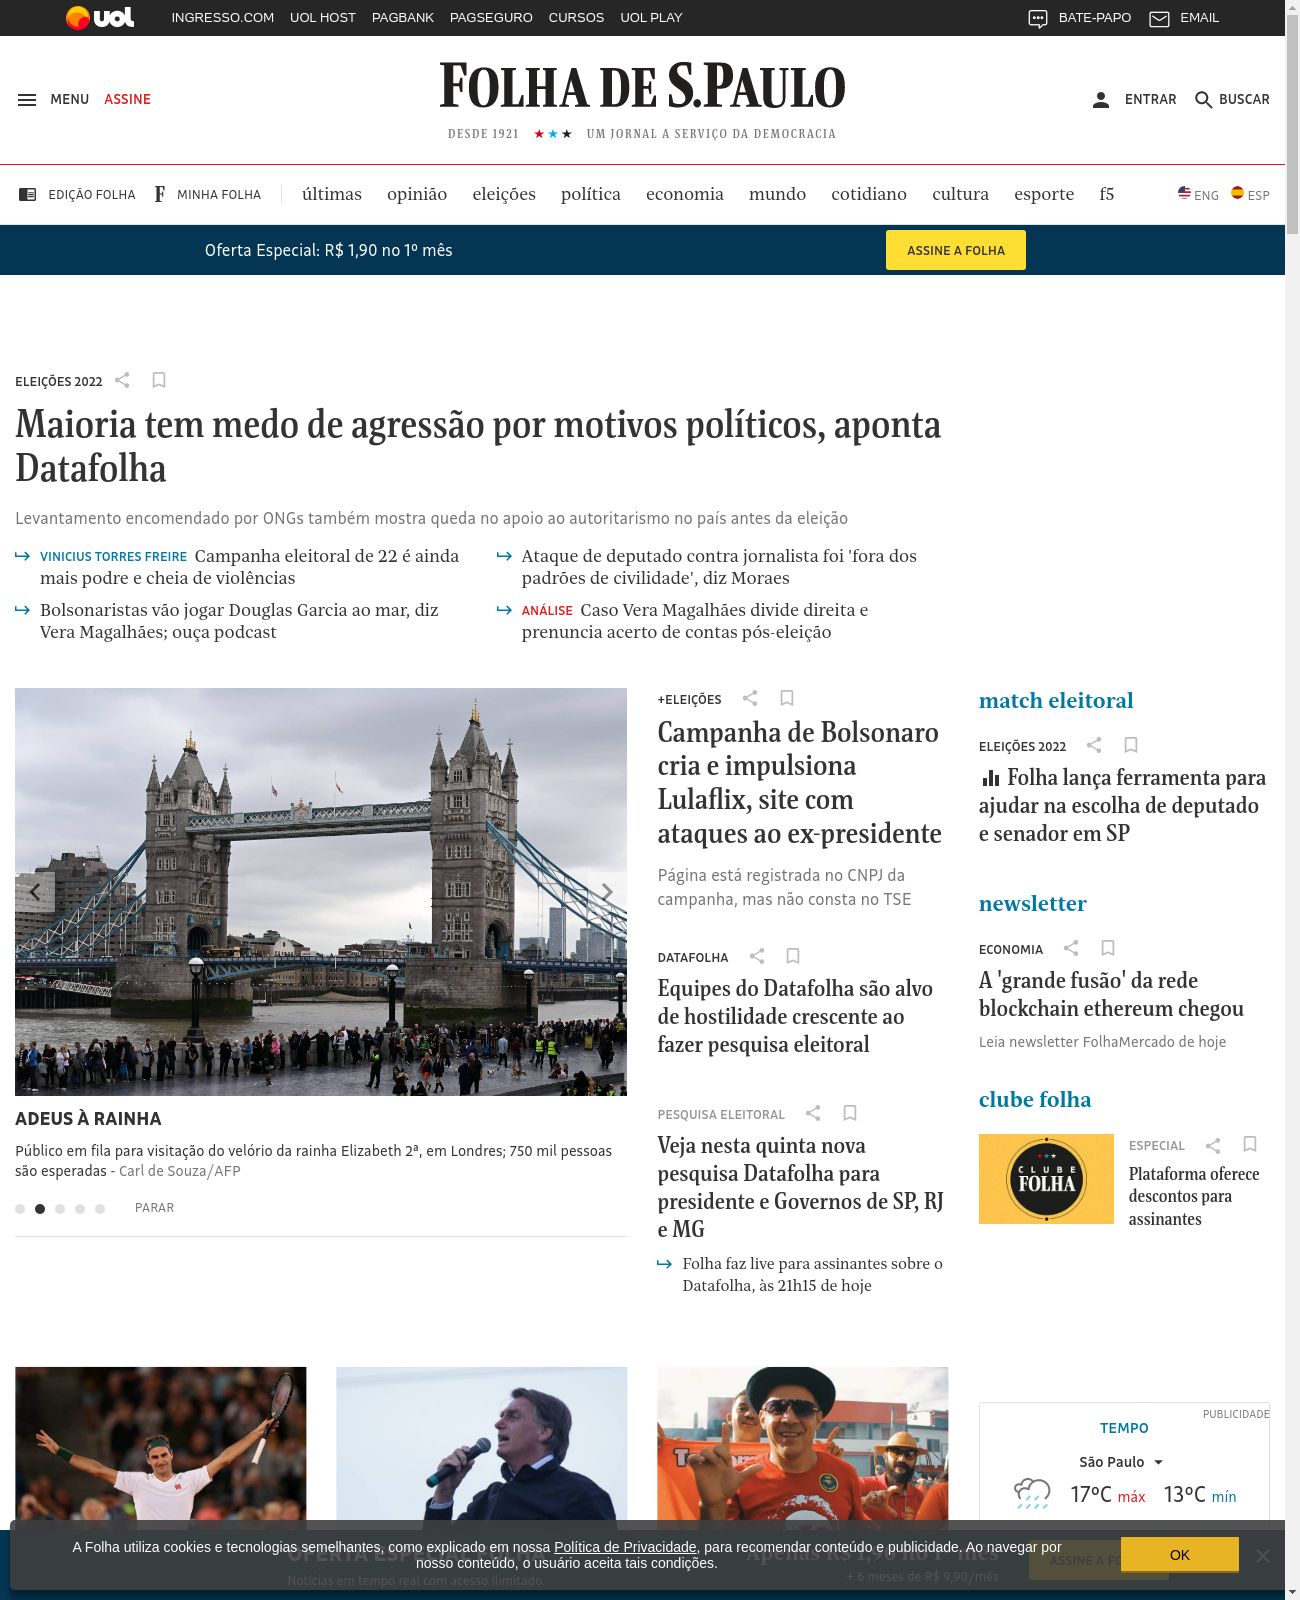 Folha de S.Paulo at 2022-09-15 13:12:35-03:00 local time